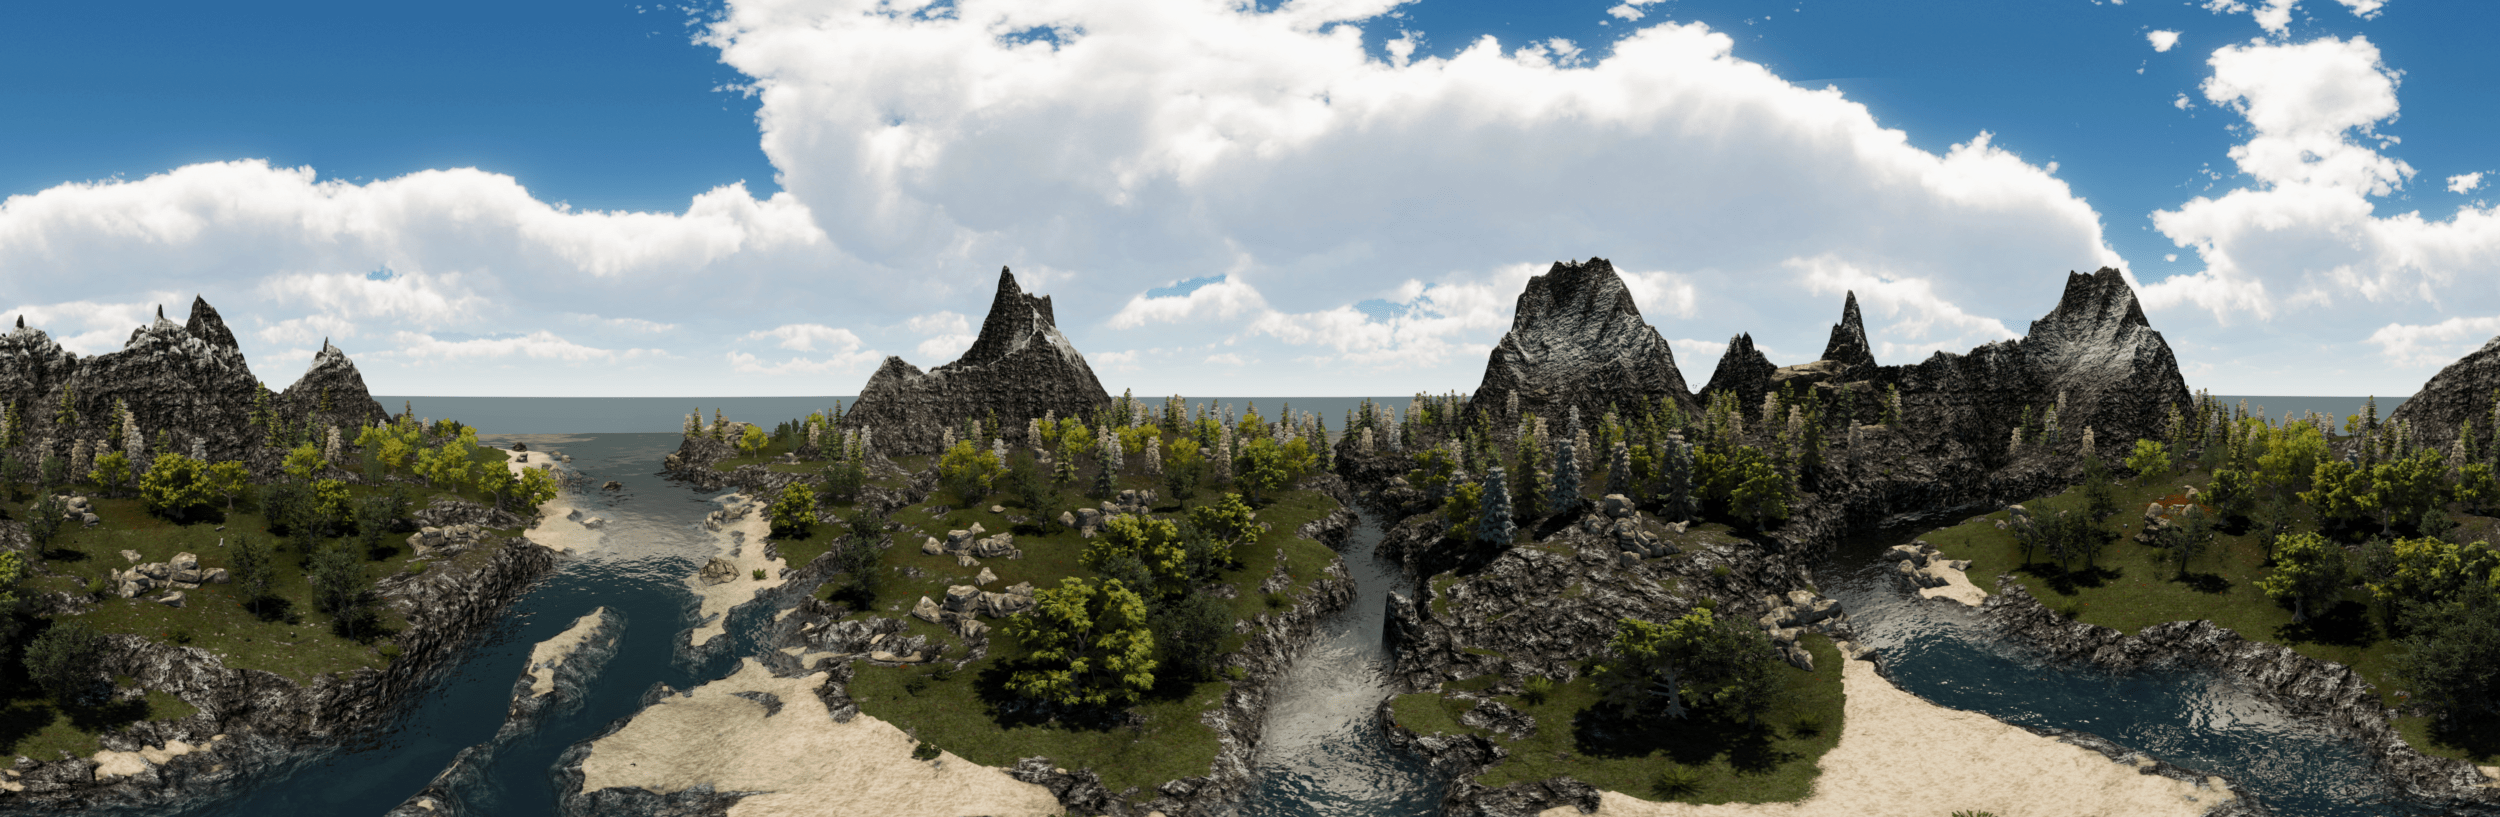 Prehistoric virtual world